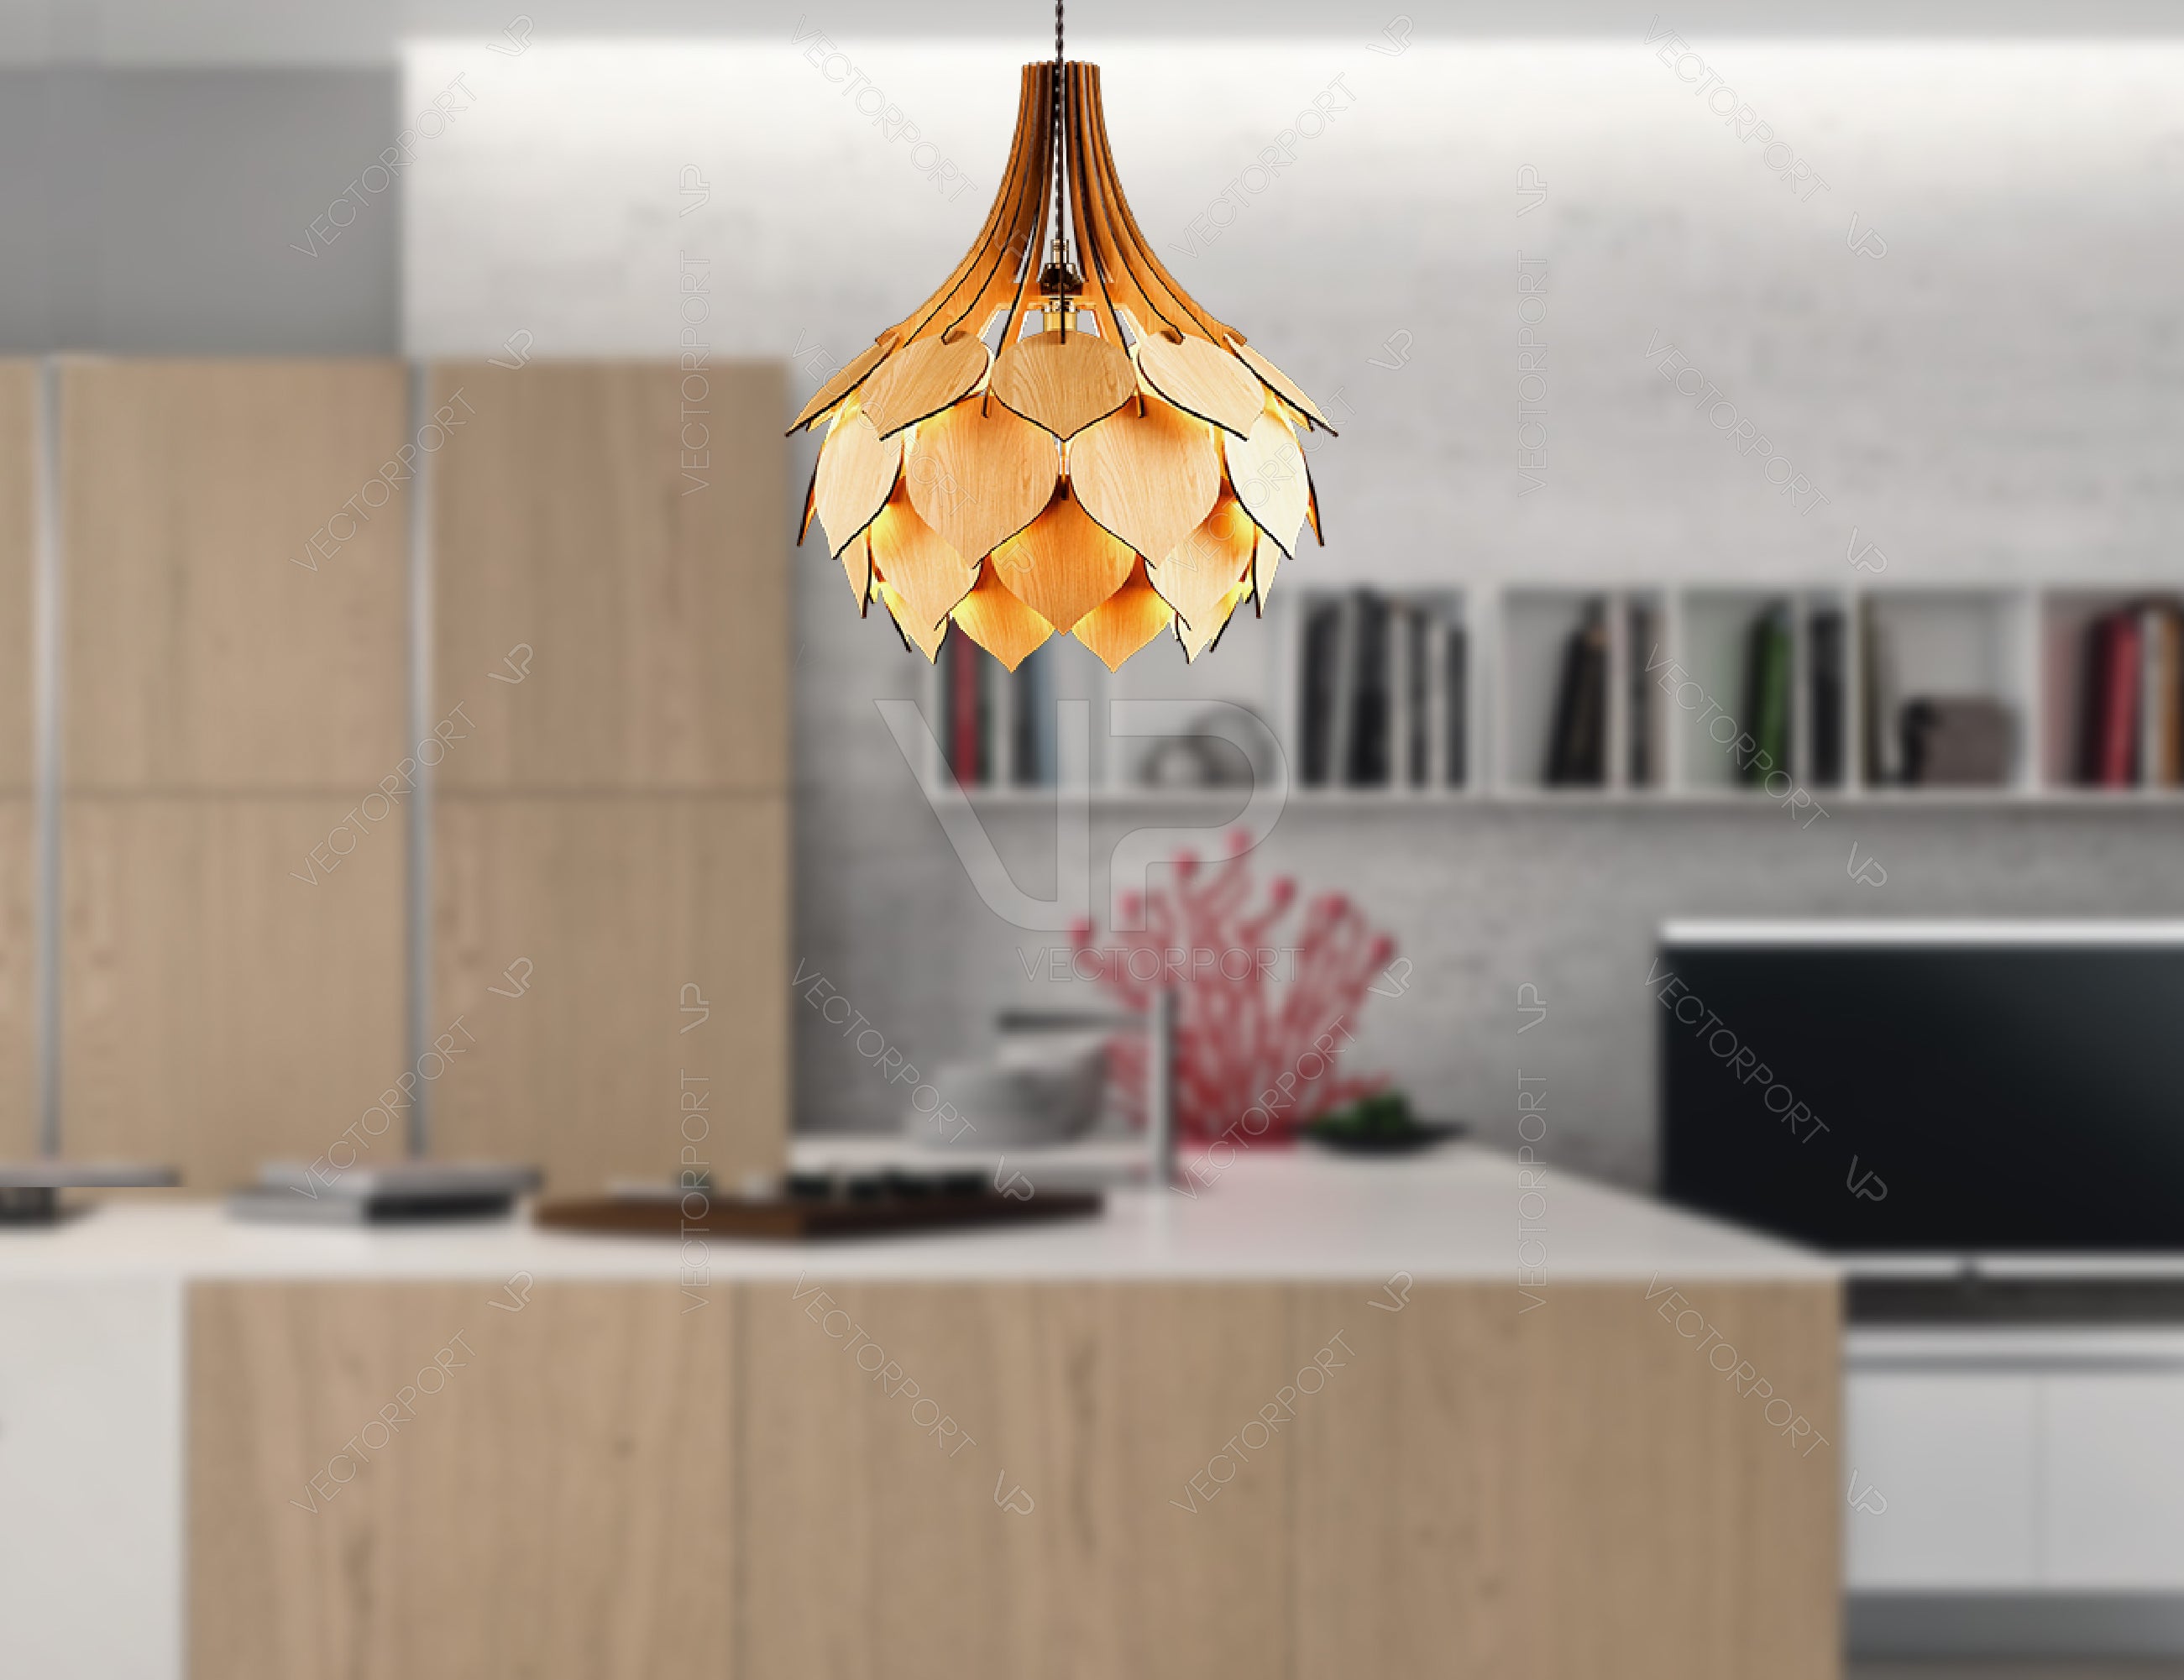 Scandinavian Pine Cone Hanging wooden chandelier lamp shade Pendant light template svg laser cut plywood Cut Files |#U022|